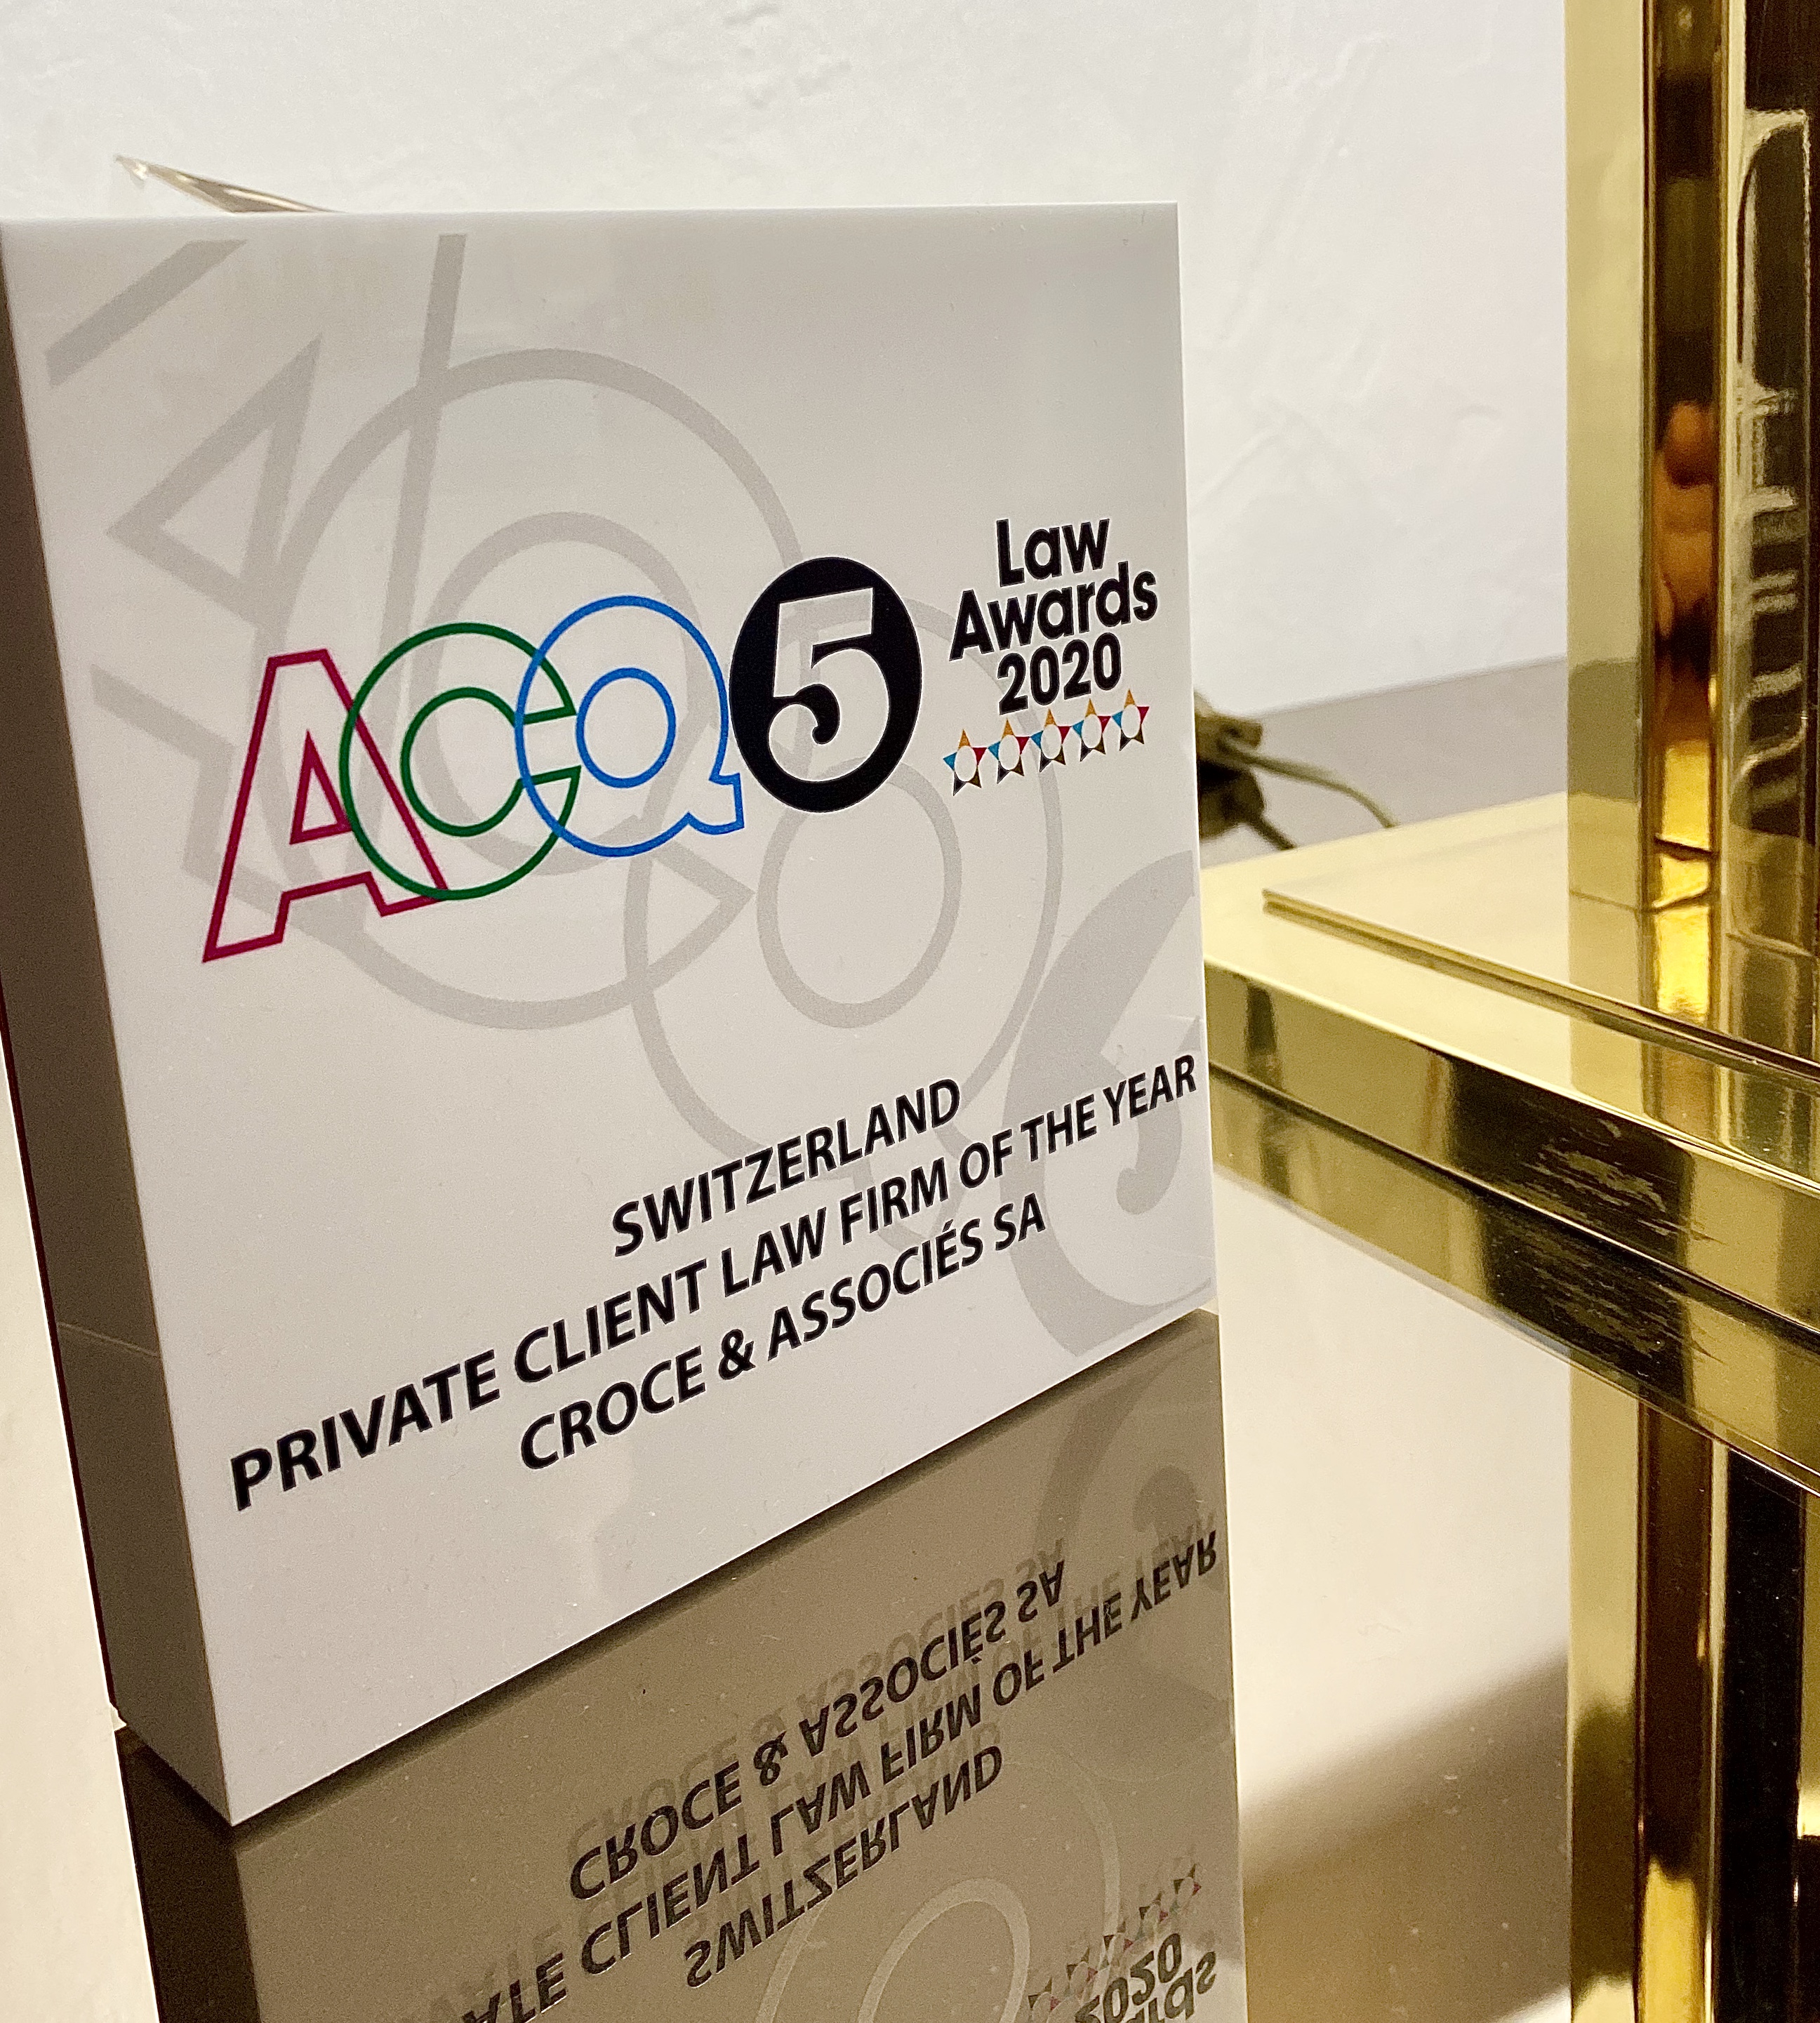 ACQ5 legal awards for CROCE & Associés SA